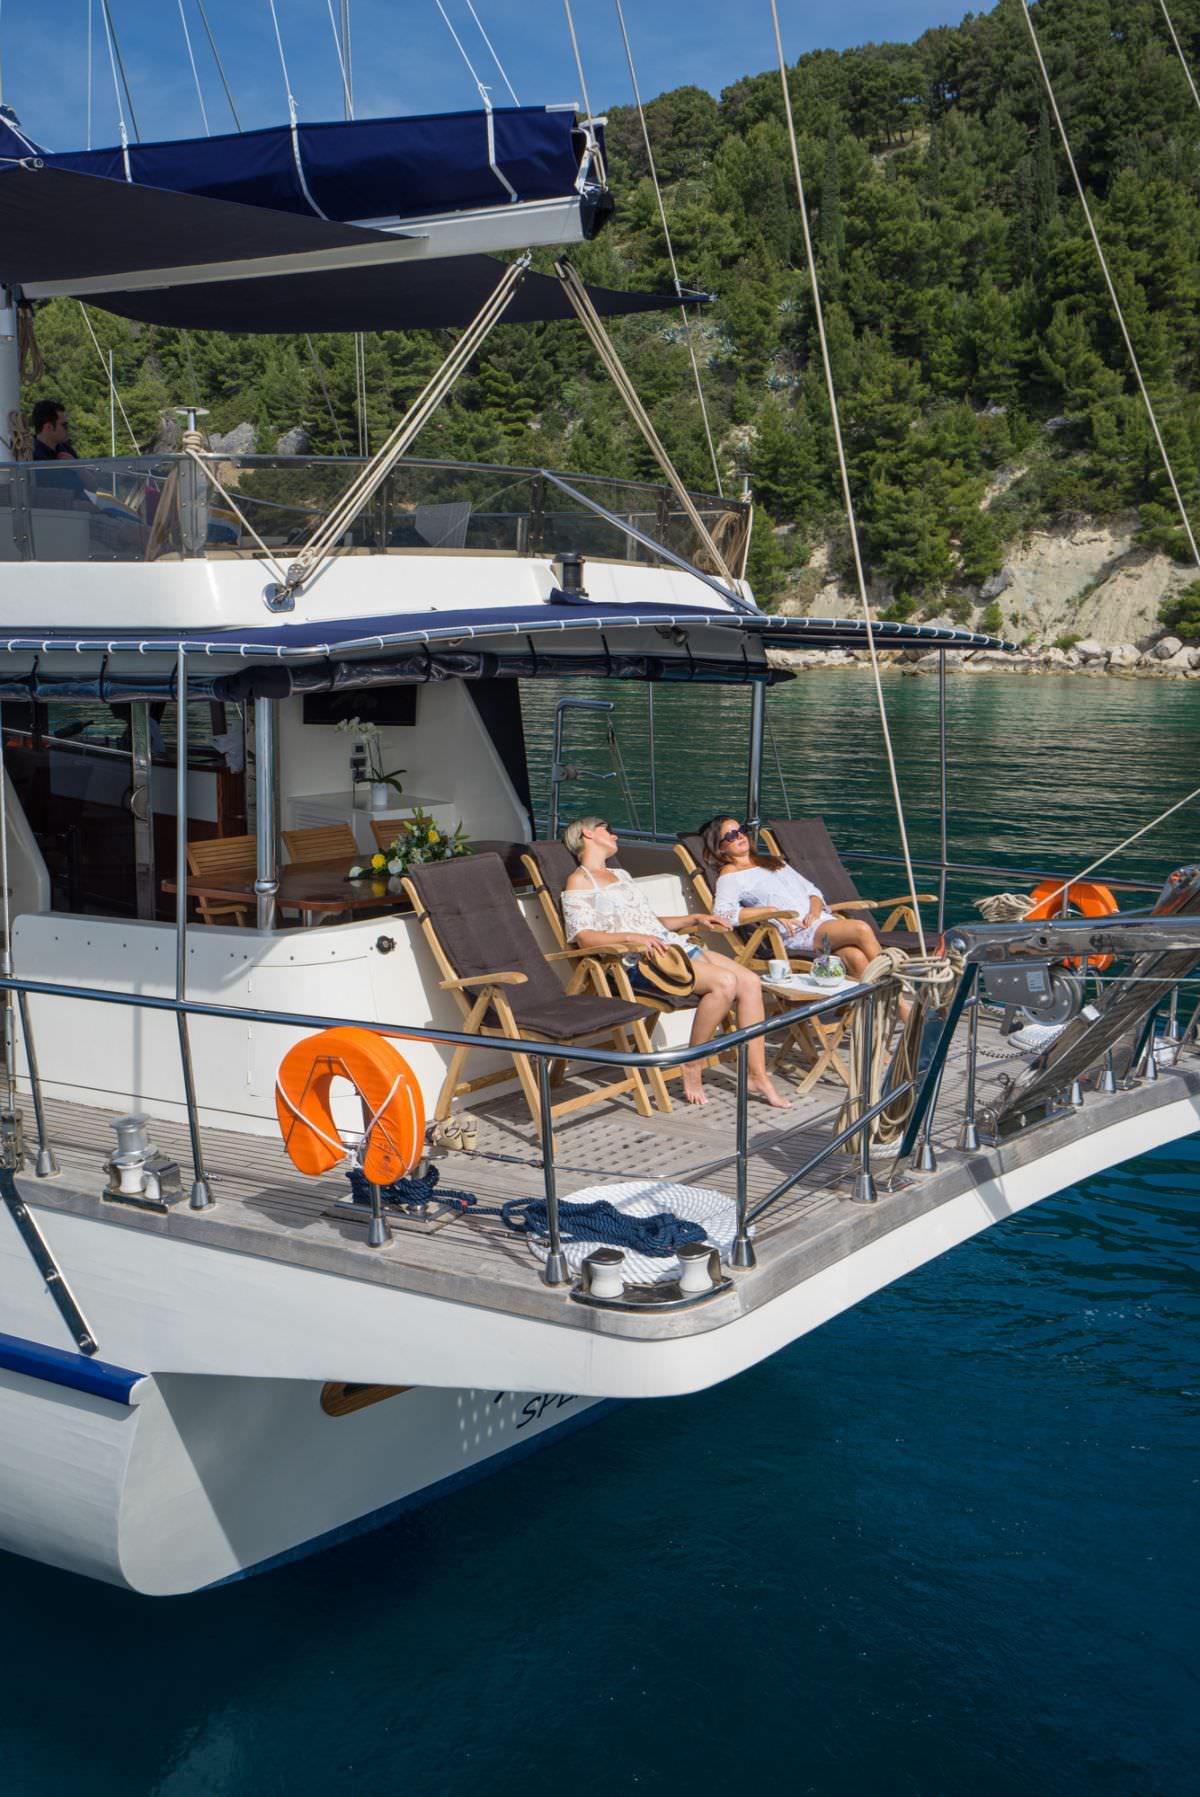 alba - Yacht Charter Brbinj & Boat hire in Croatia 4